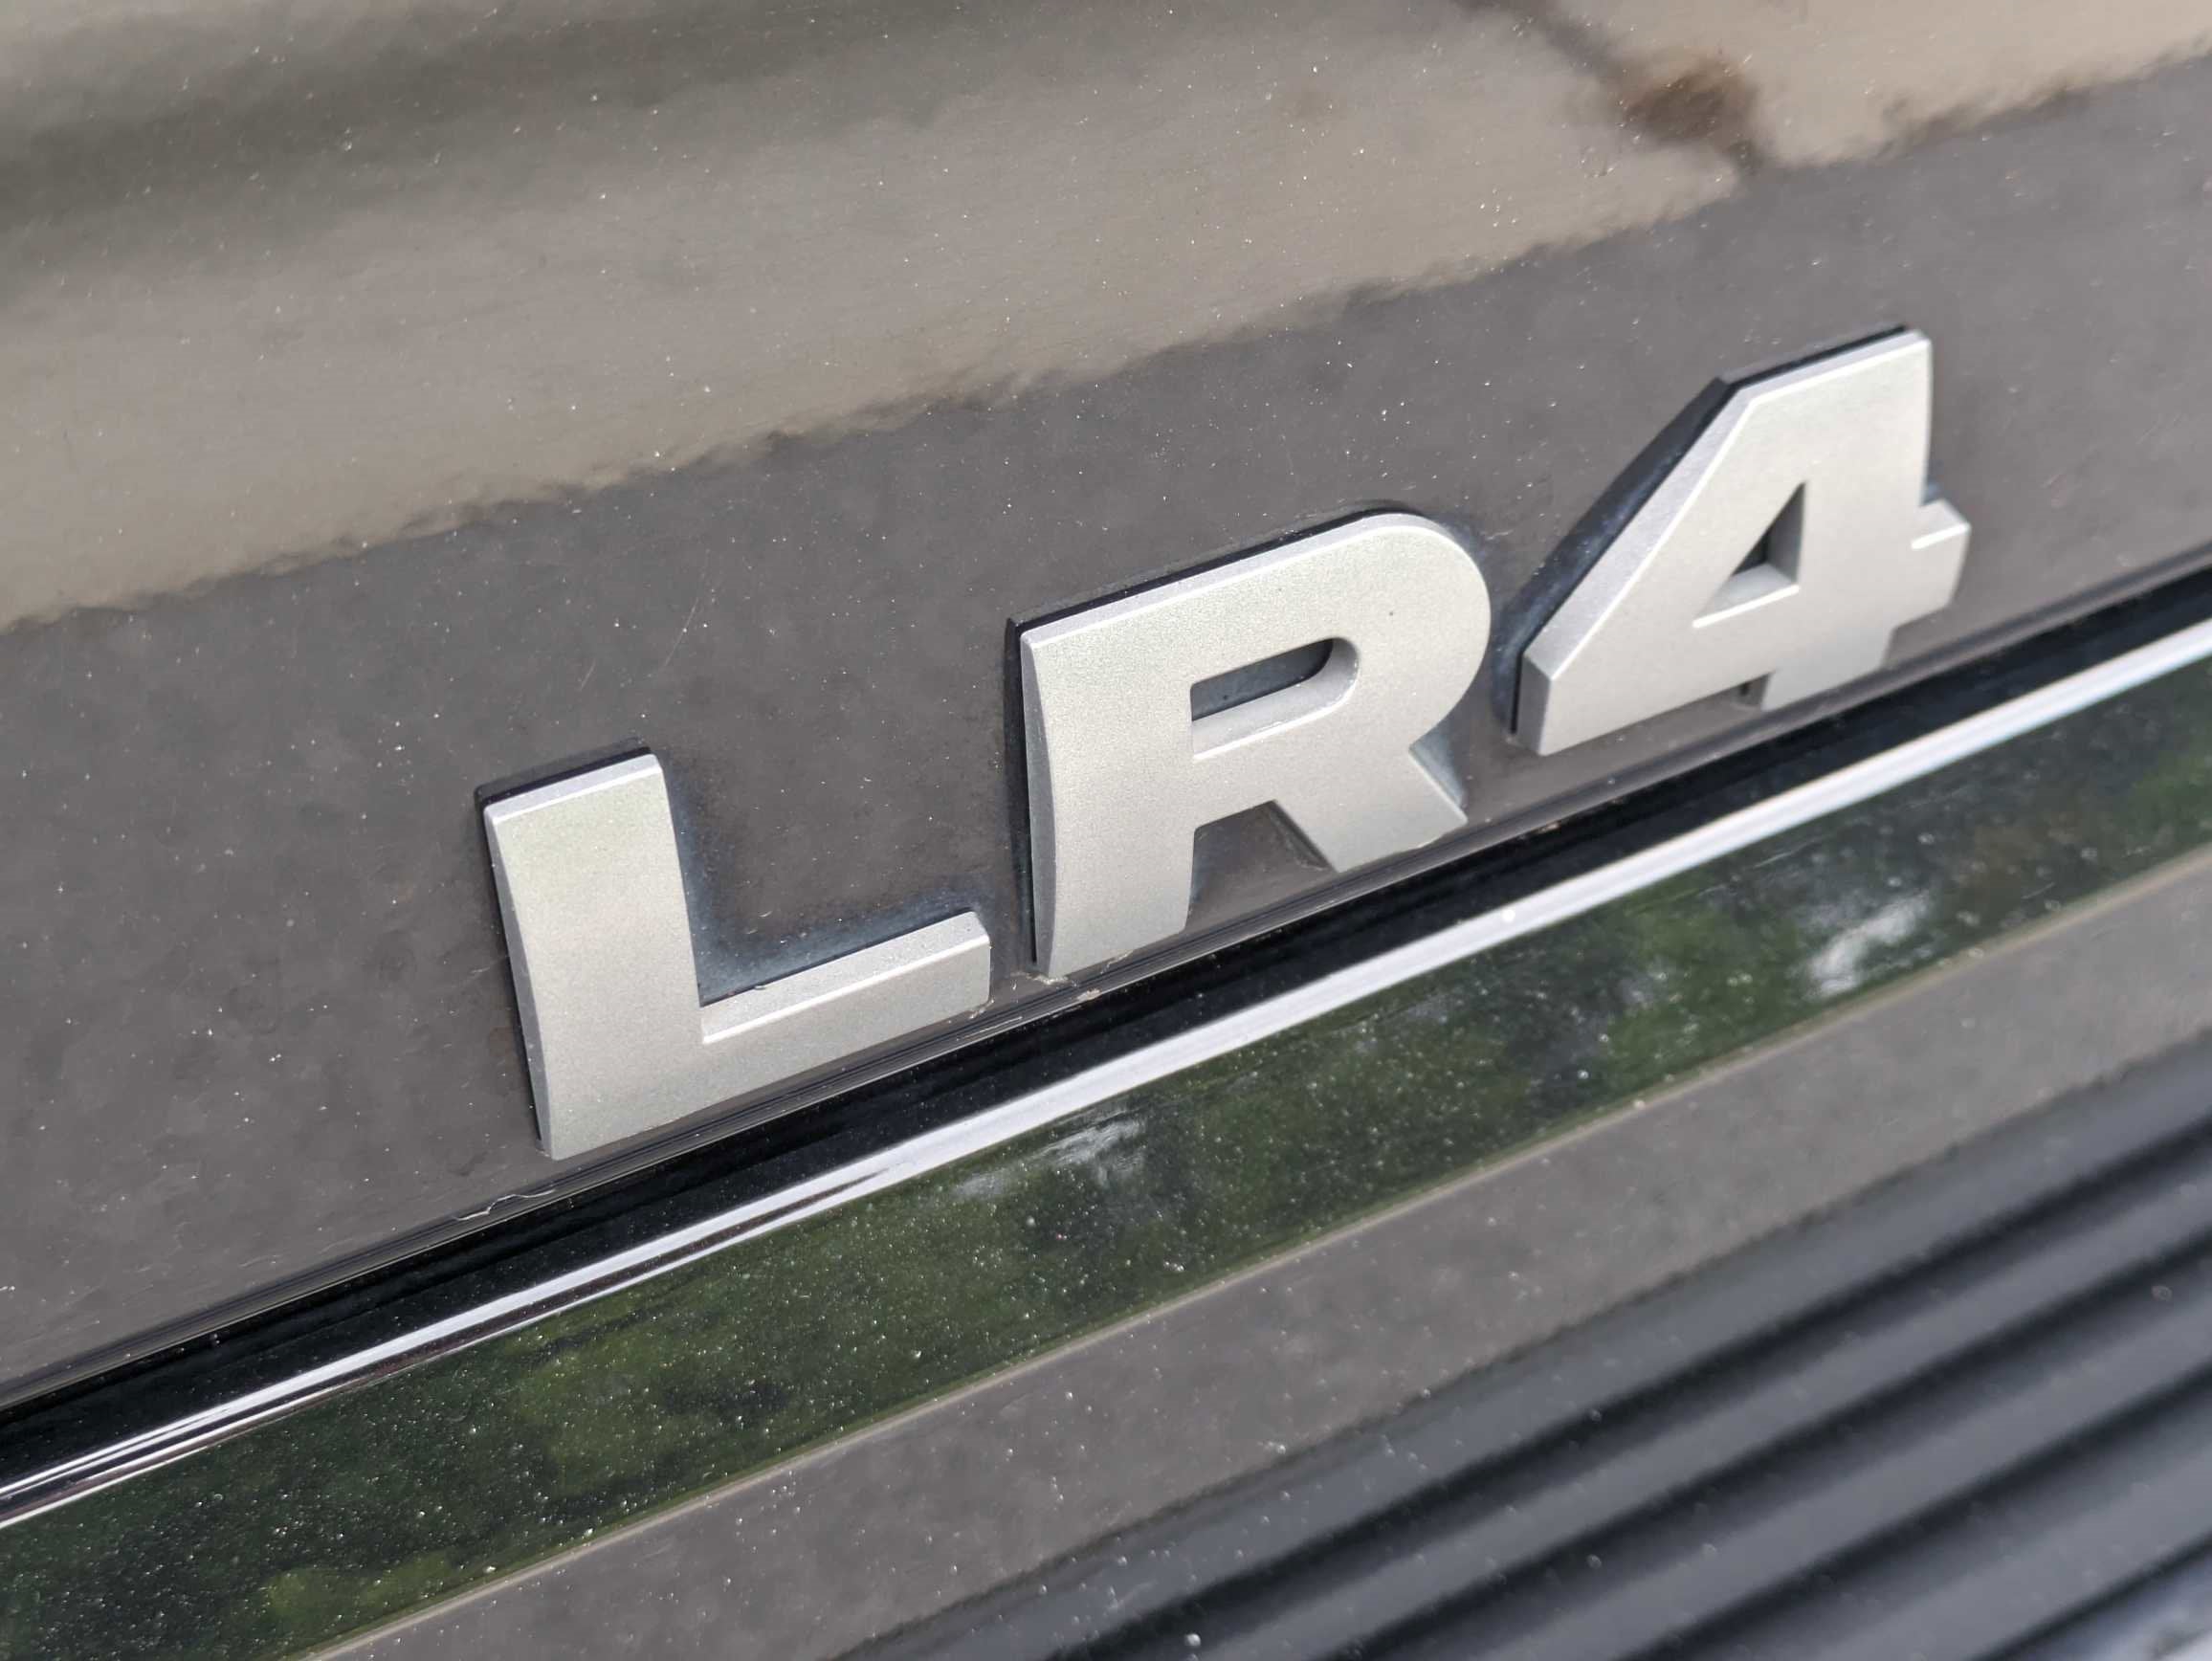 2016 Land Rover LR4 HSE